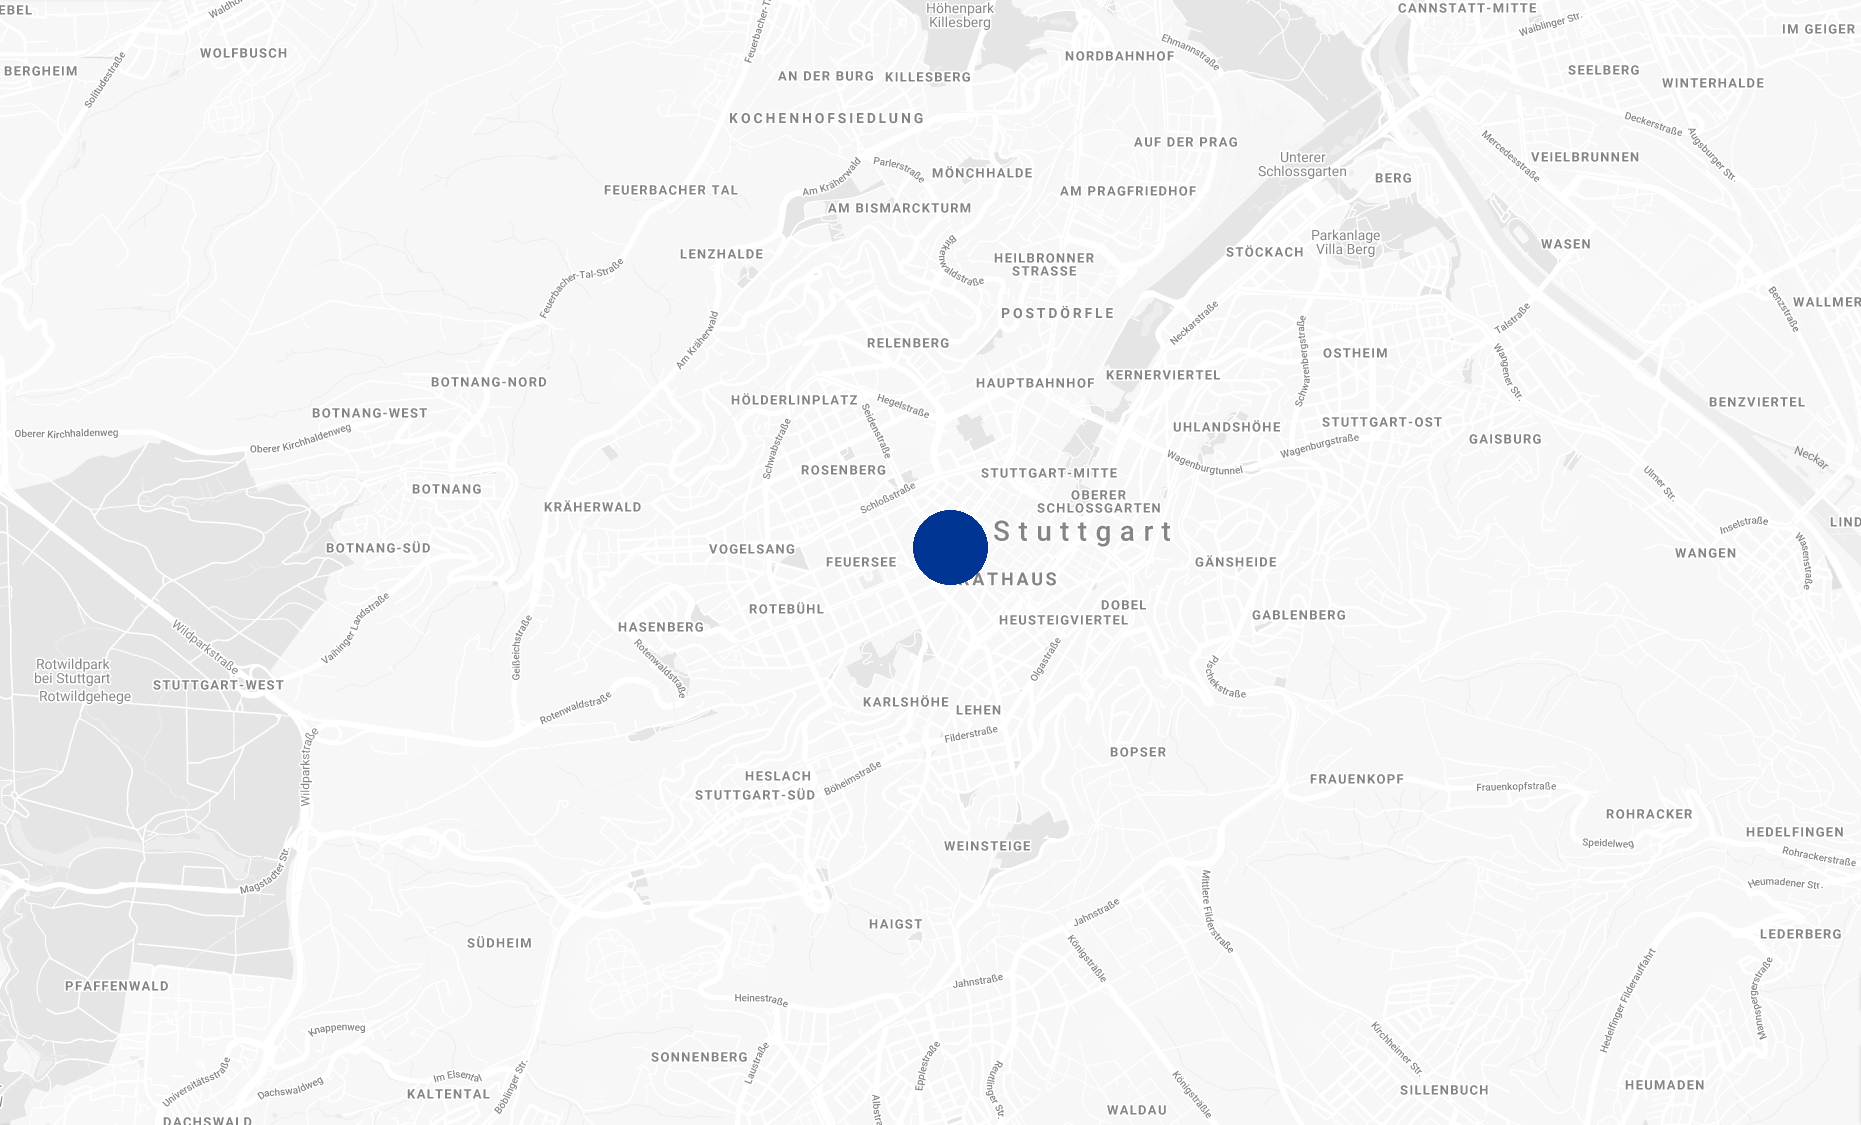 Project Location Stuttgart